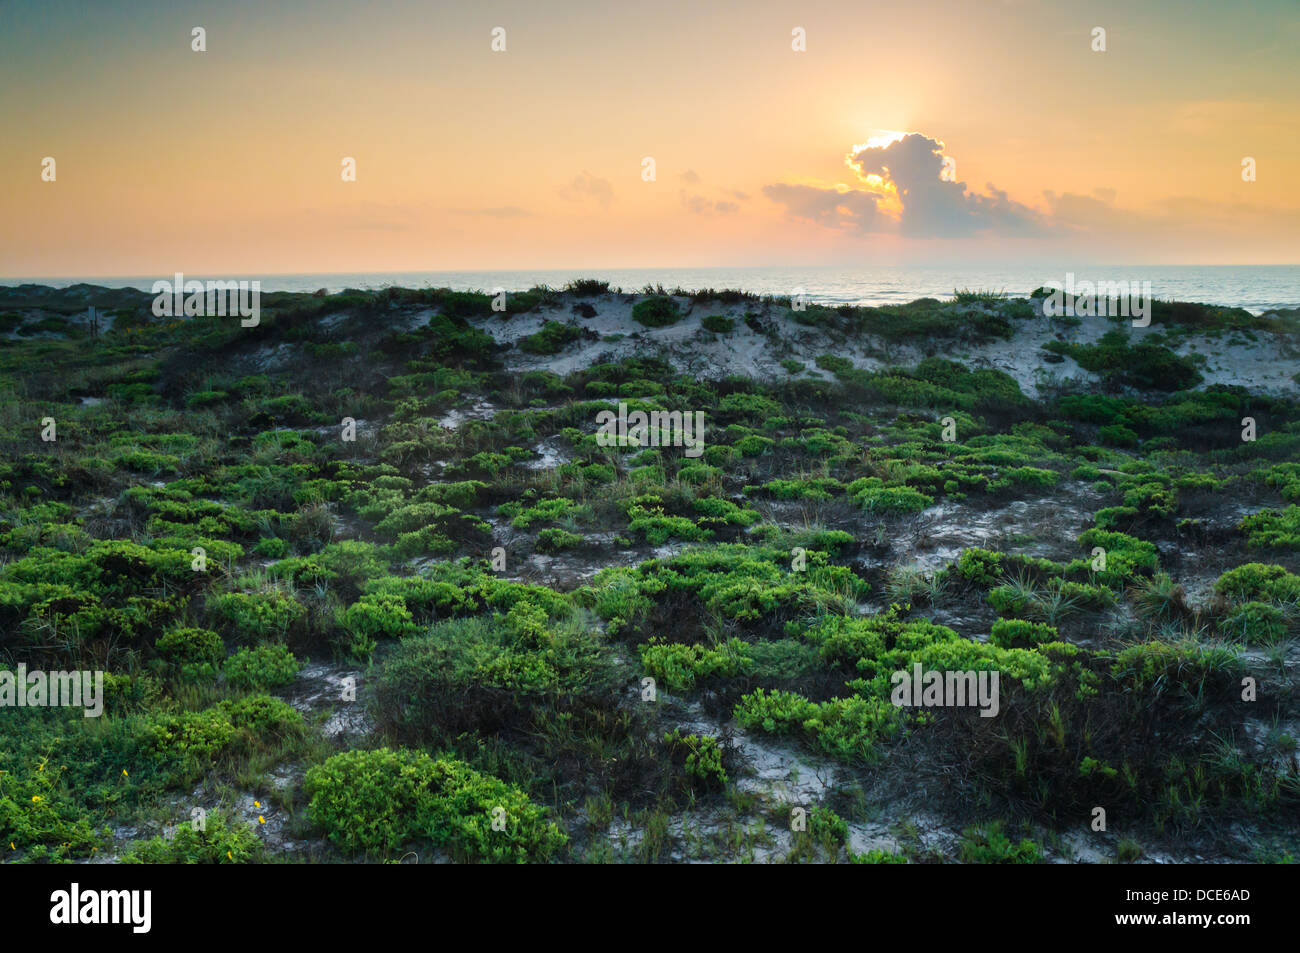 The morning sun started shining on the vegetation along Padre Island National Seashore. Stock Photo